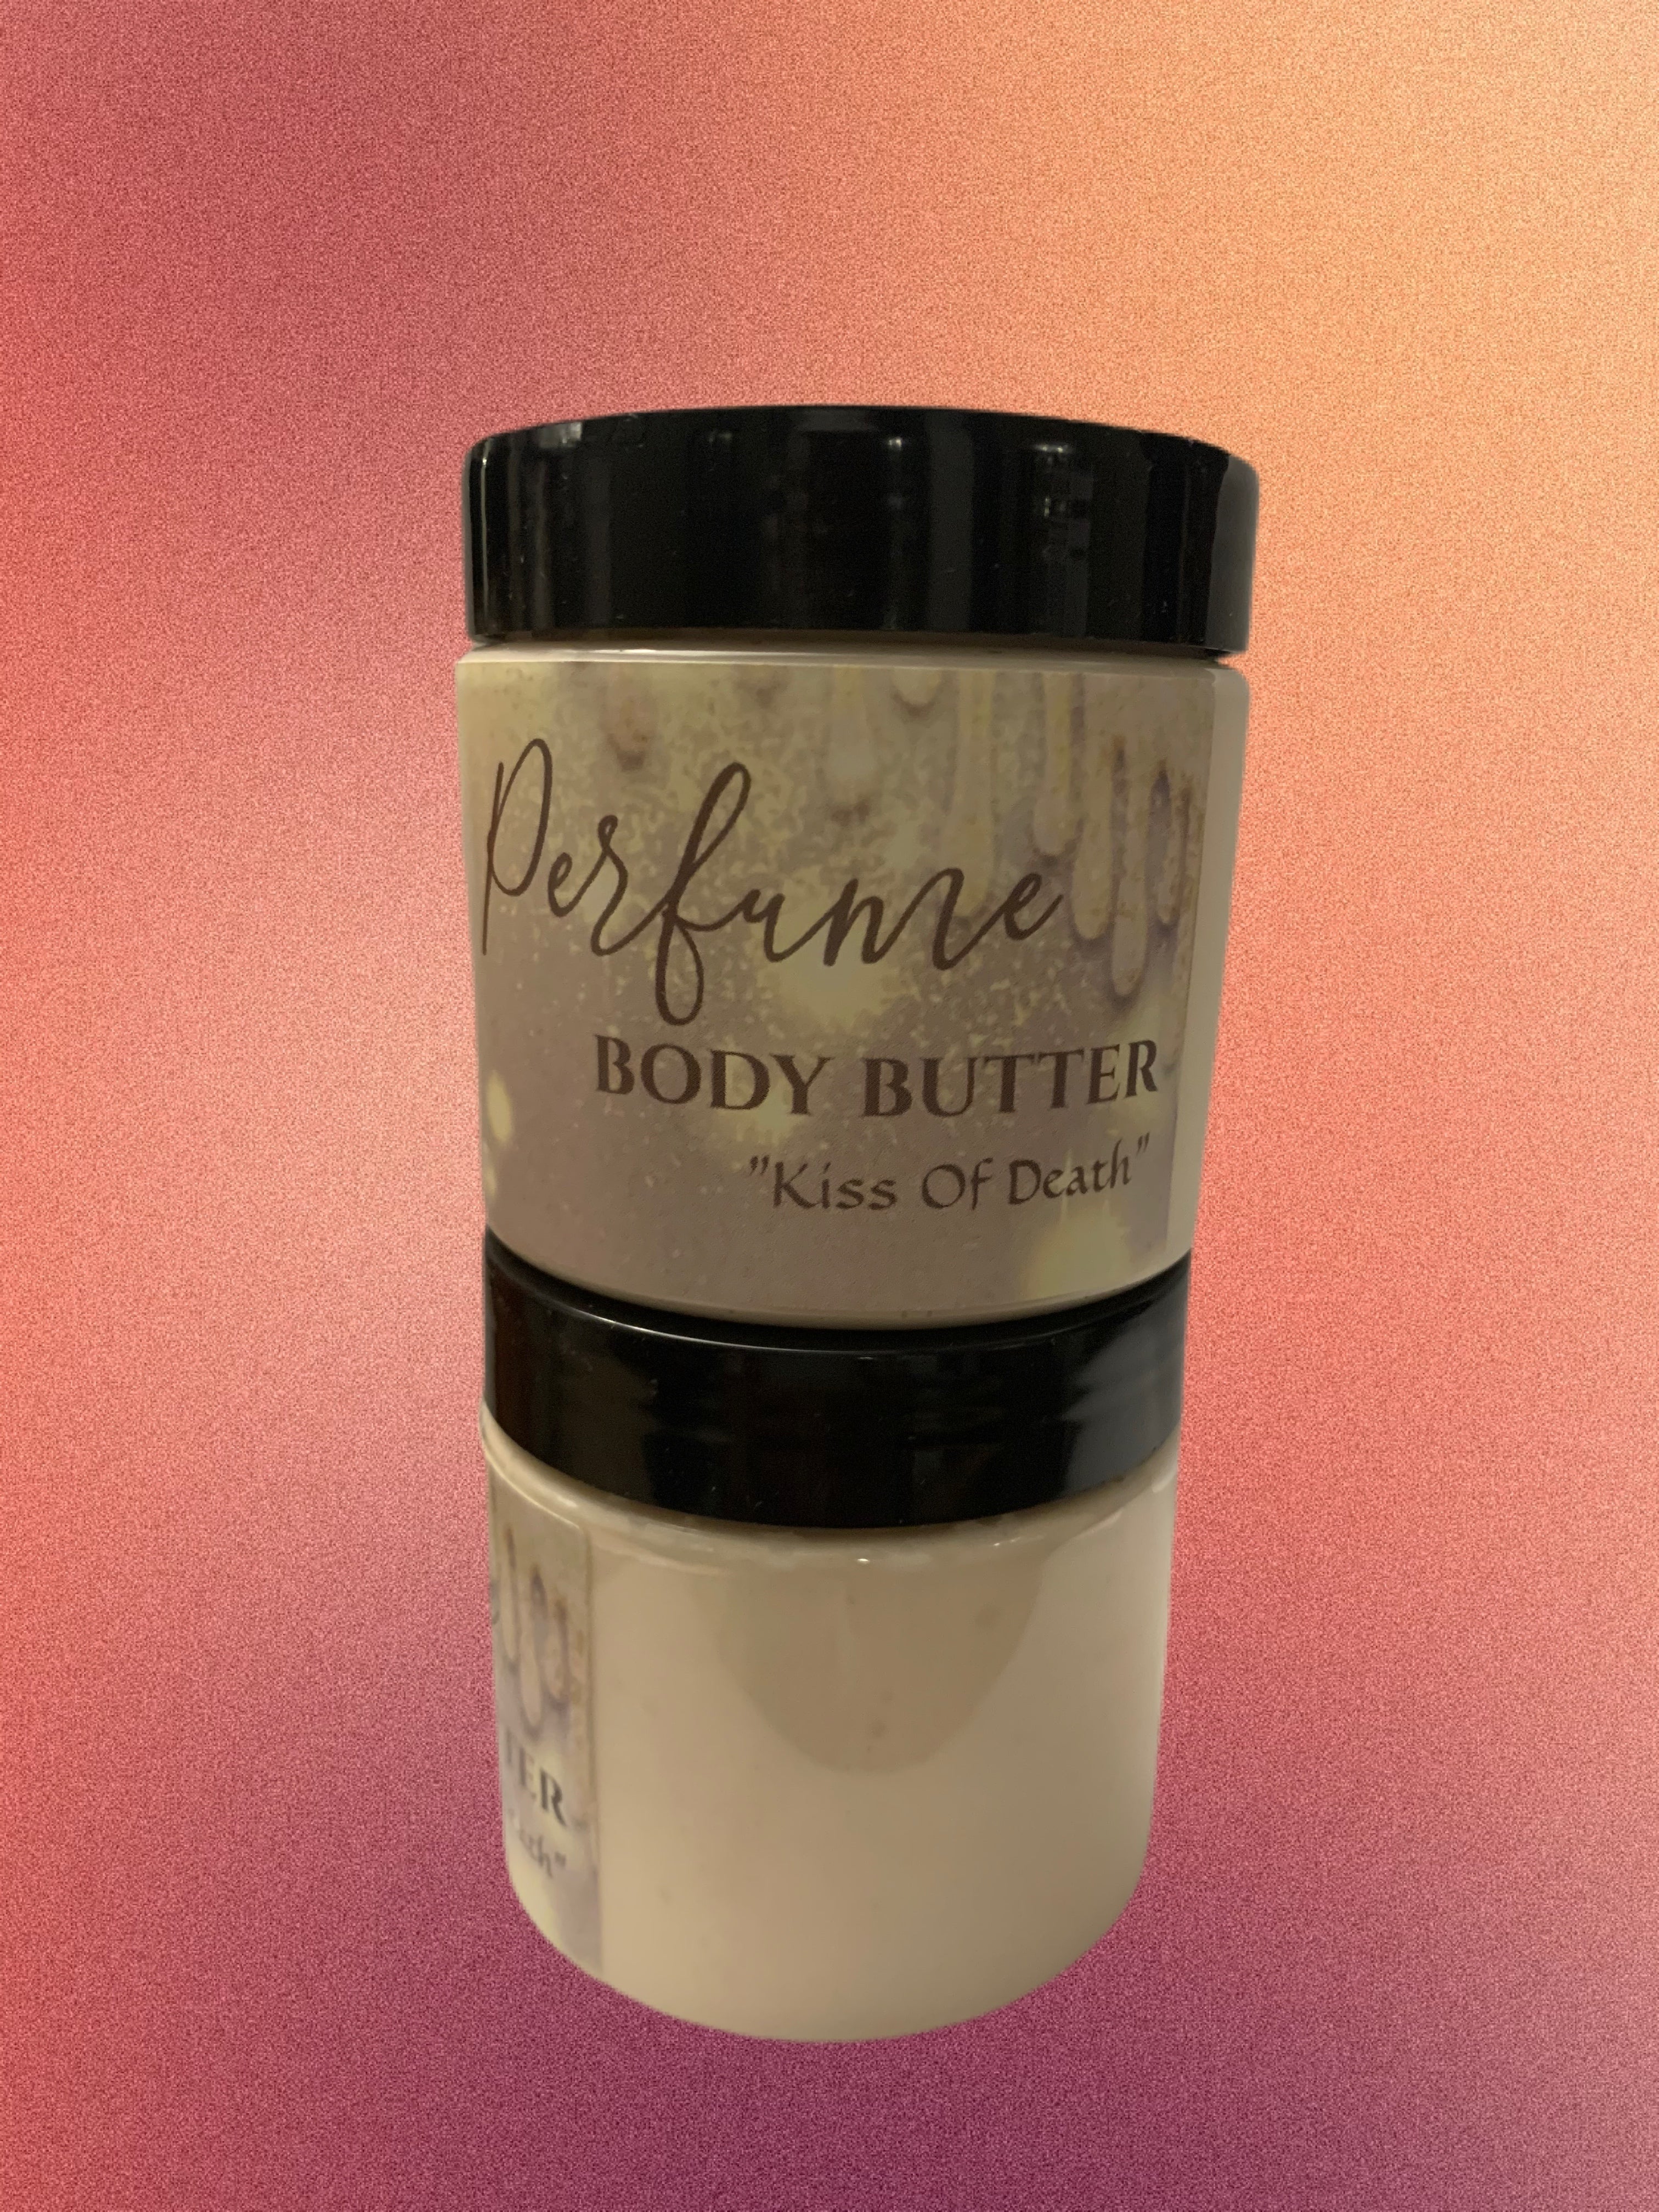 Women’s Premium Perfume Body Butters